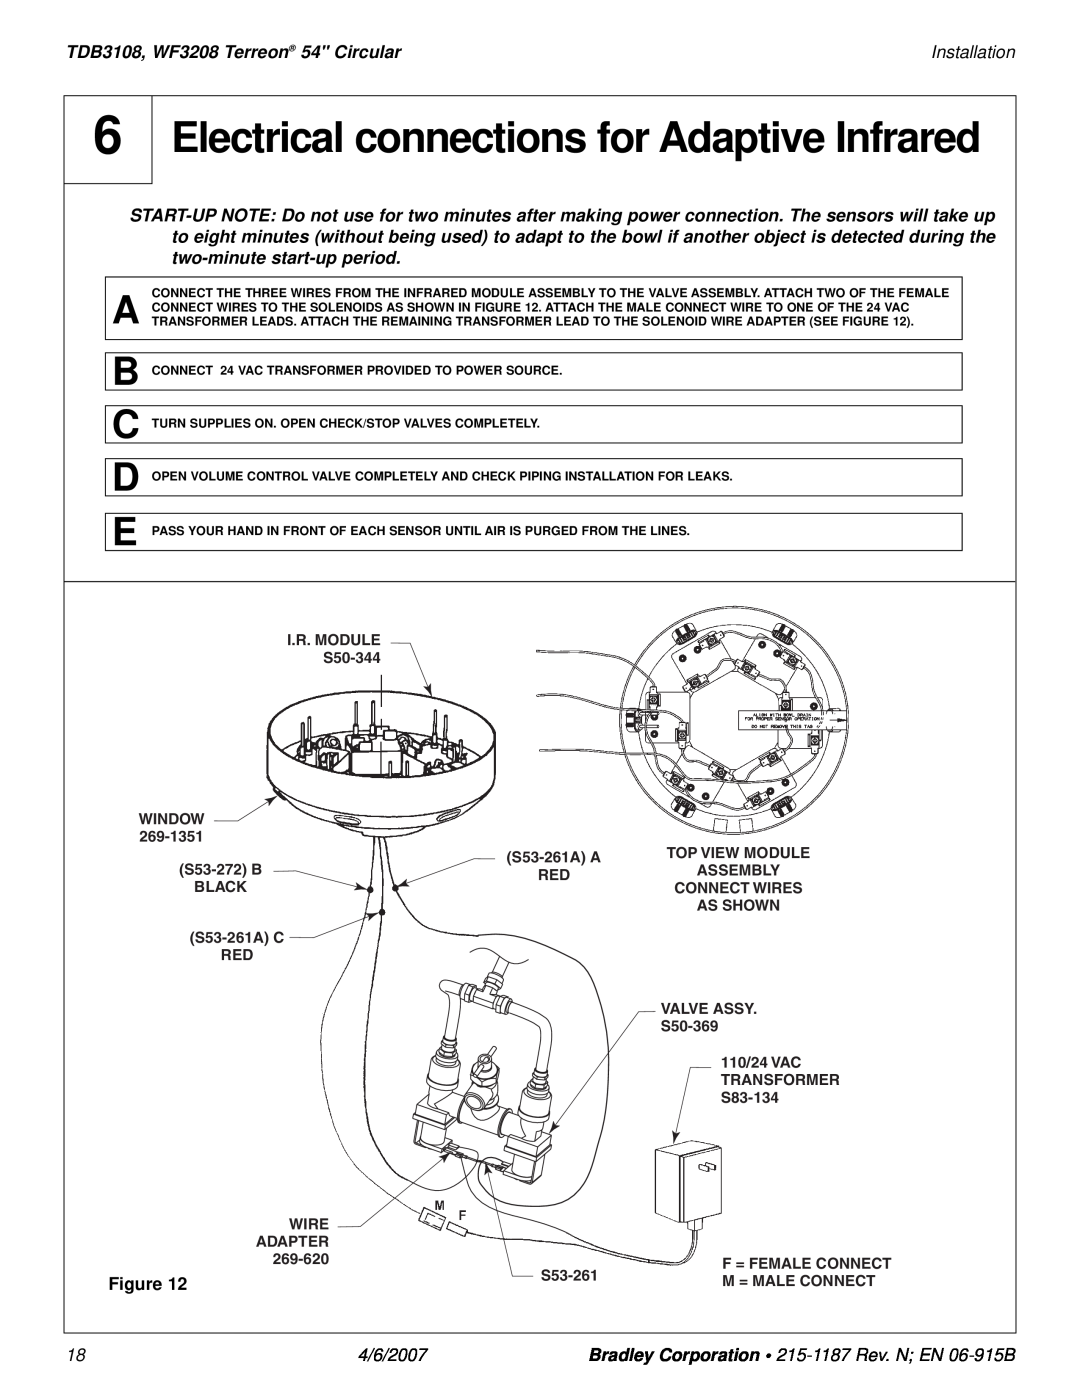 Bradley Smoker Electrical connections for Adaptive Infrared, TDB3108, WF3208 Terreon 54 Circular, Installation 